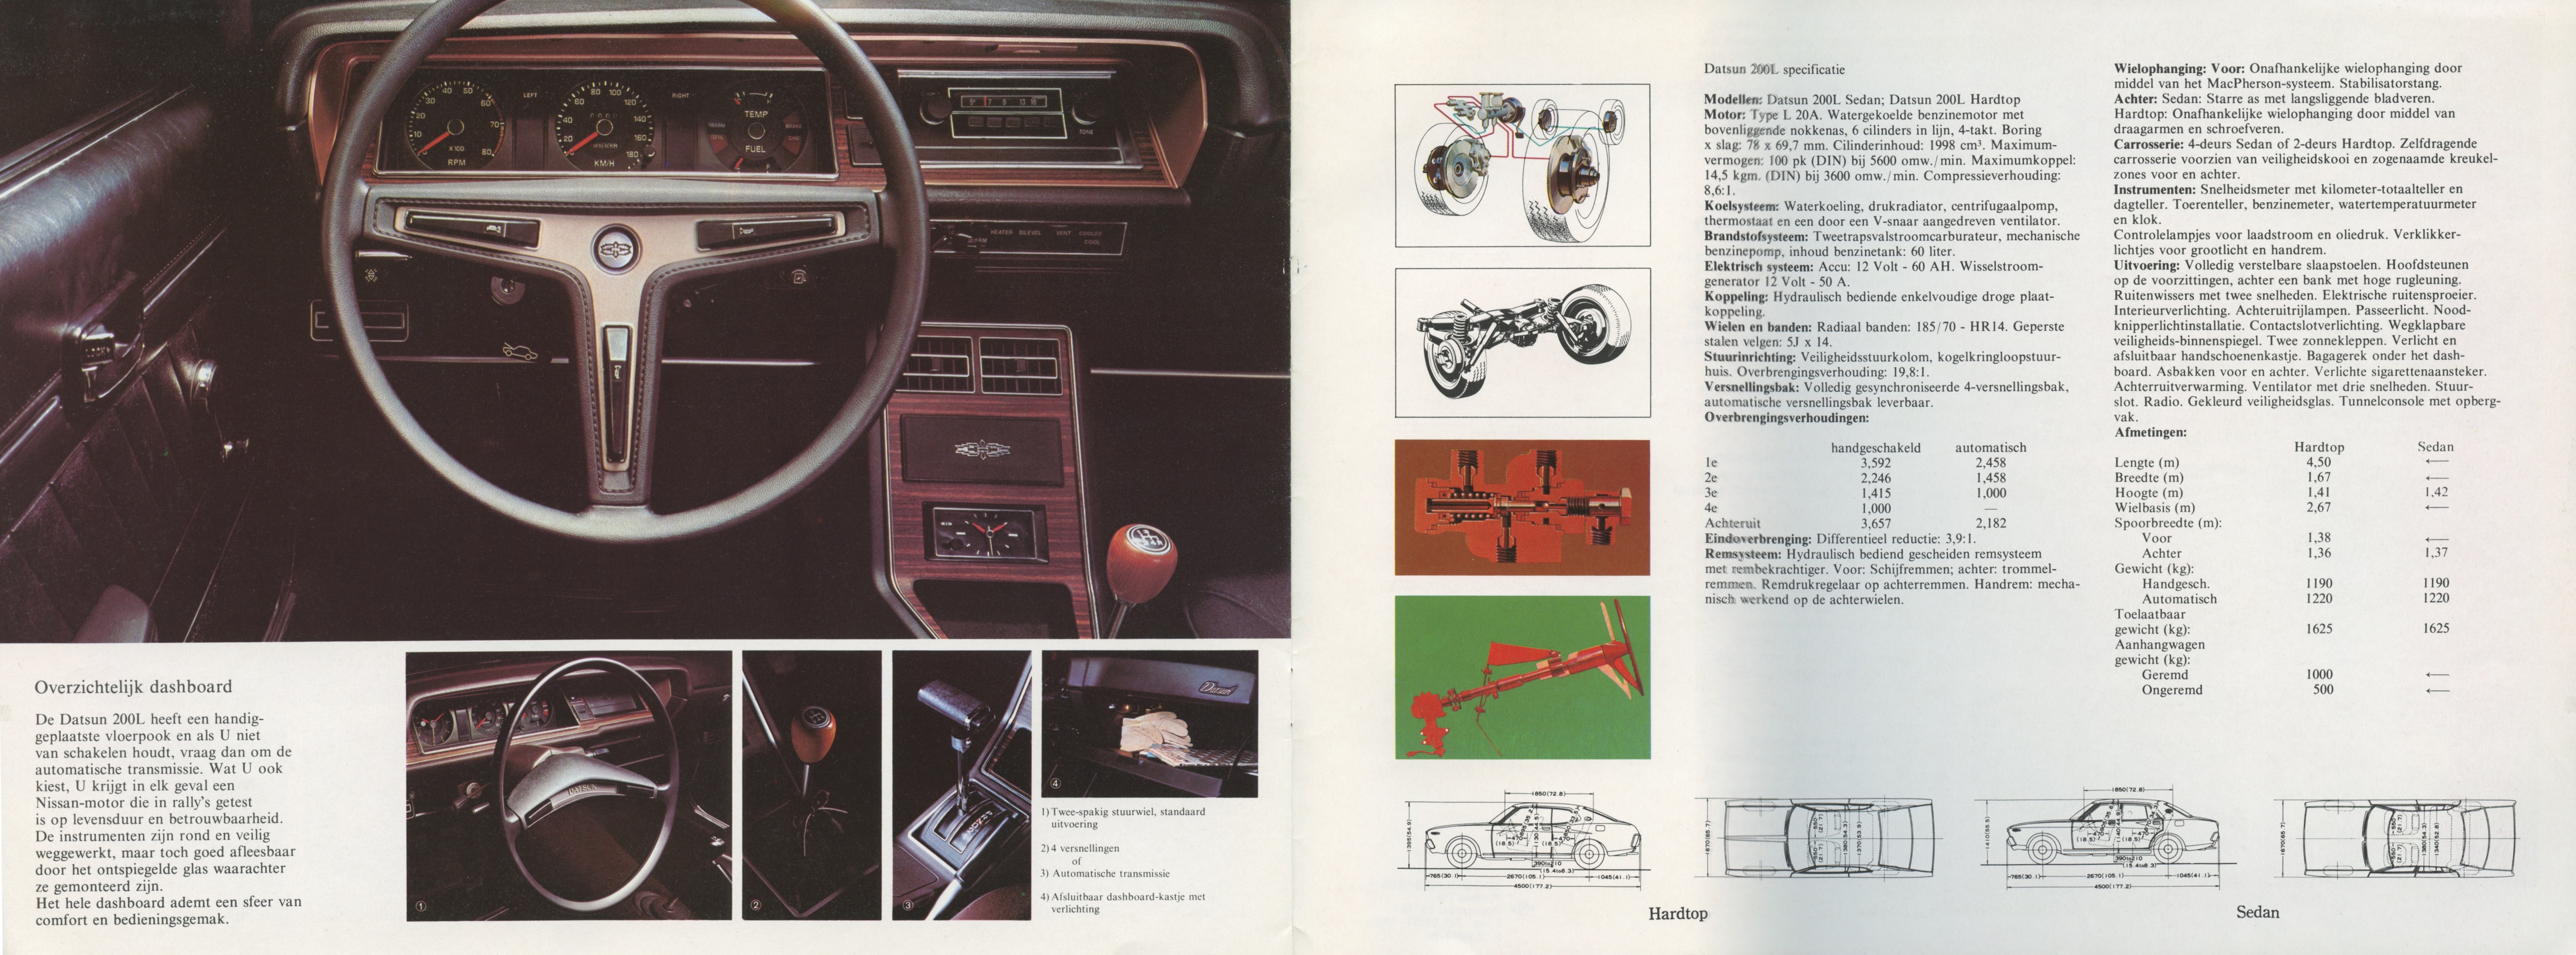 Datsun 200L hardtop en sedan - Dutch brochure - page 6 and 7